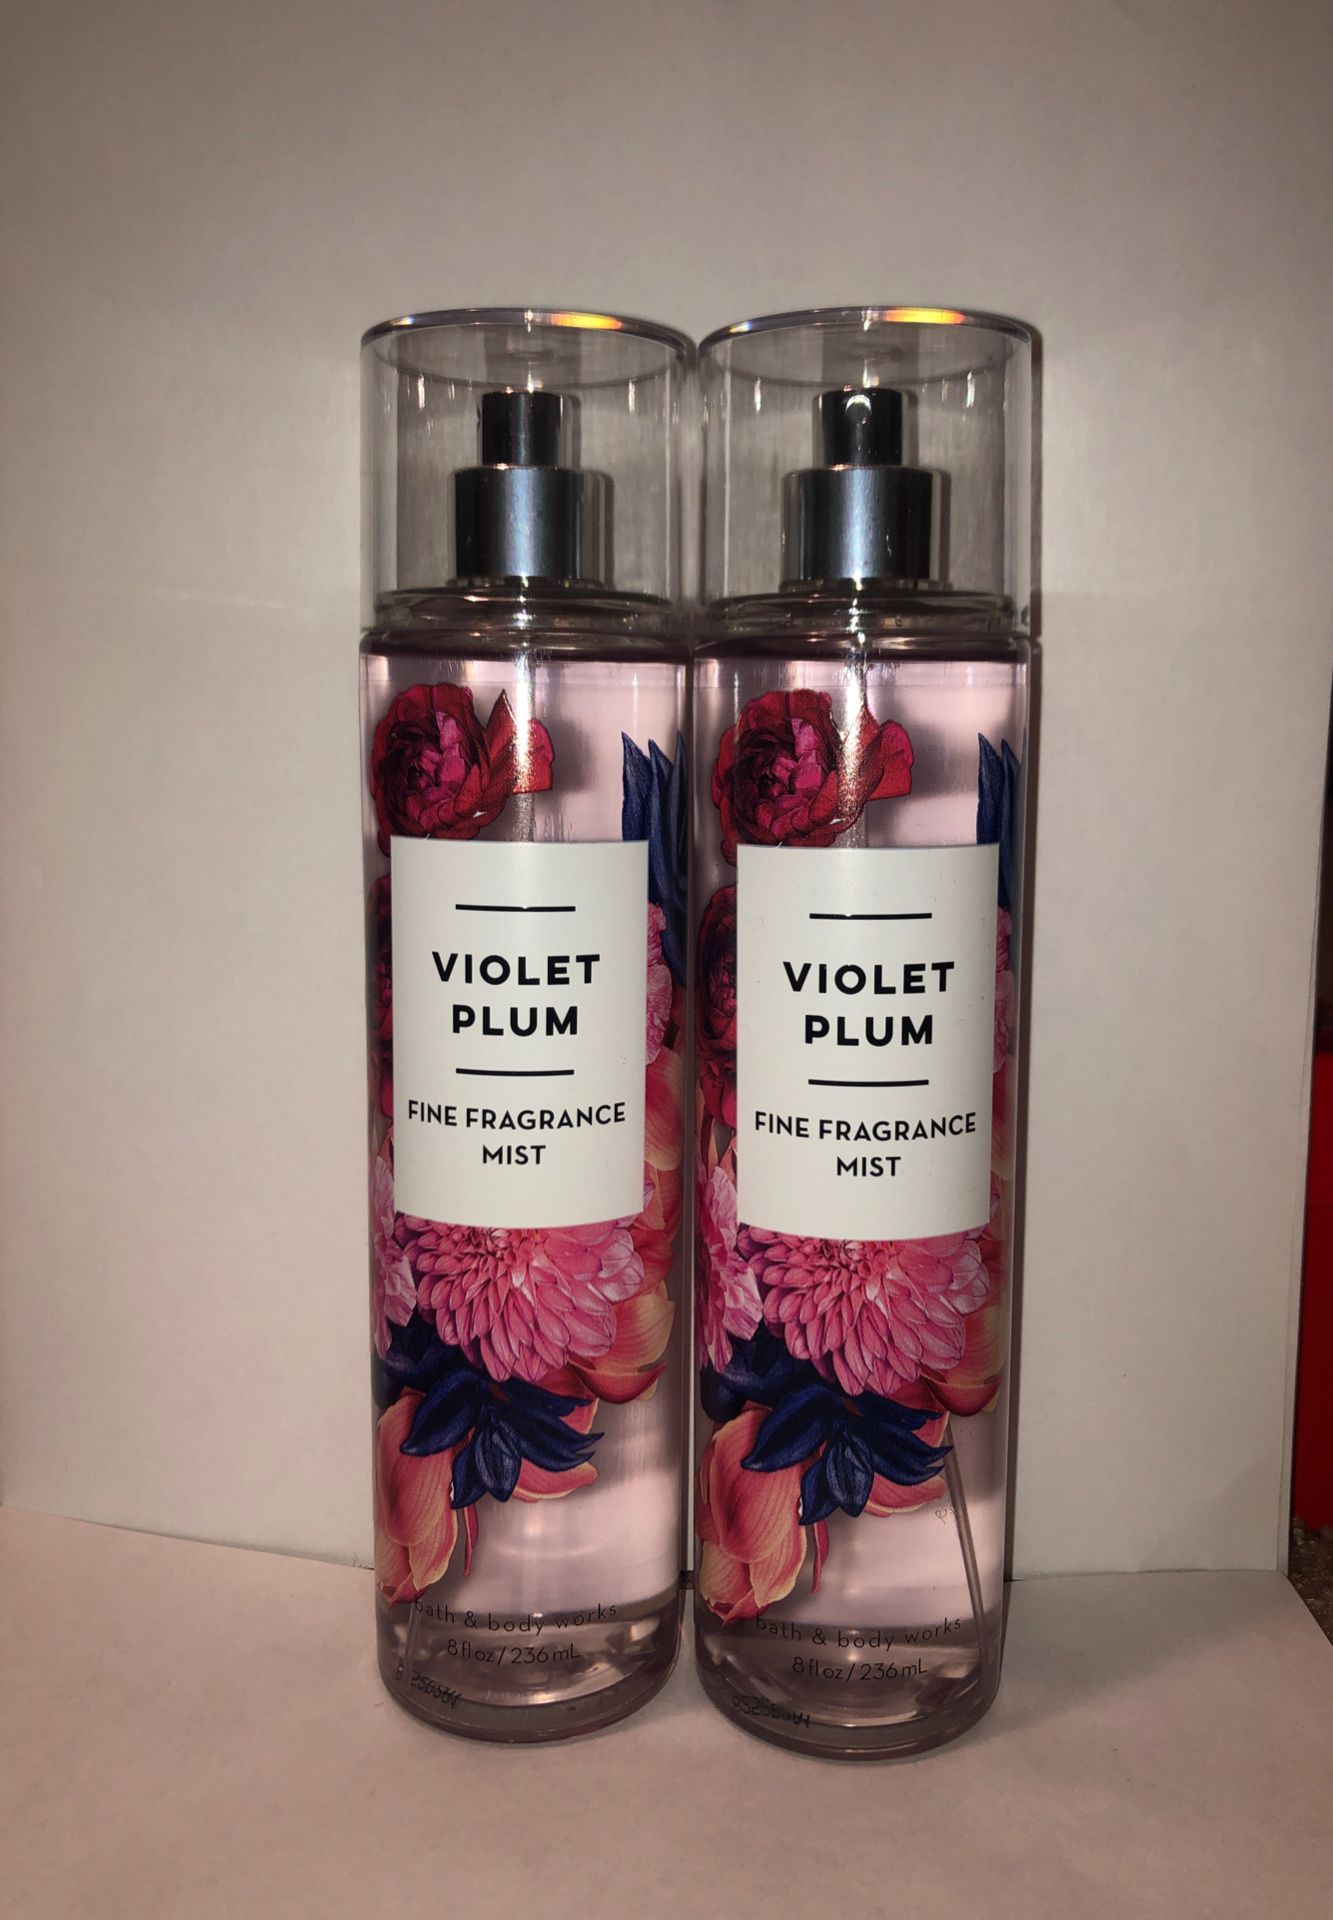 Violet plum fragrance mist spray